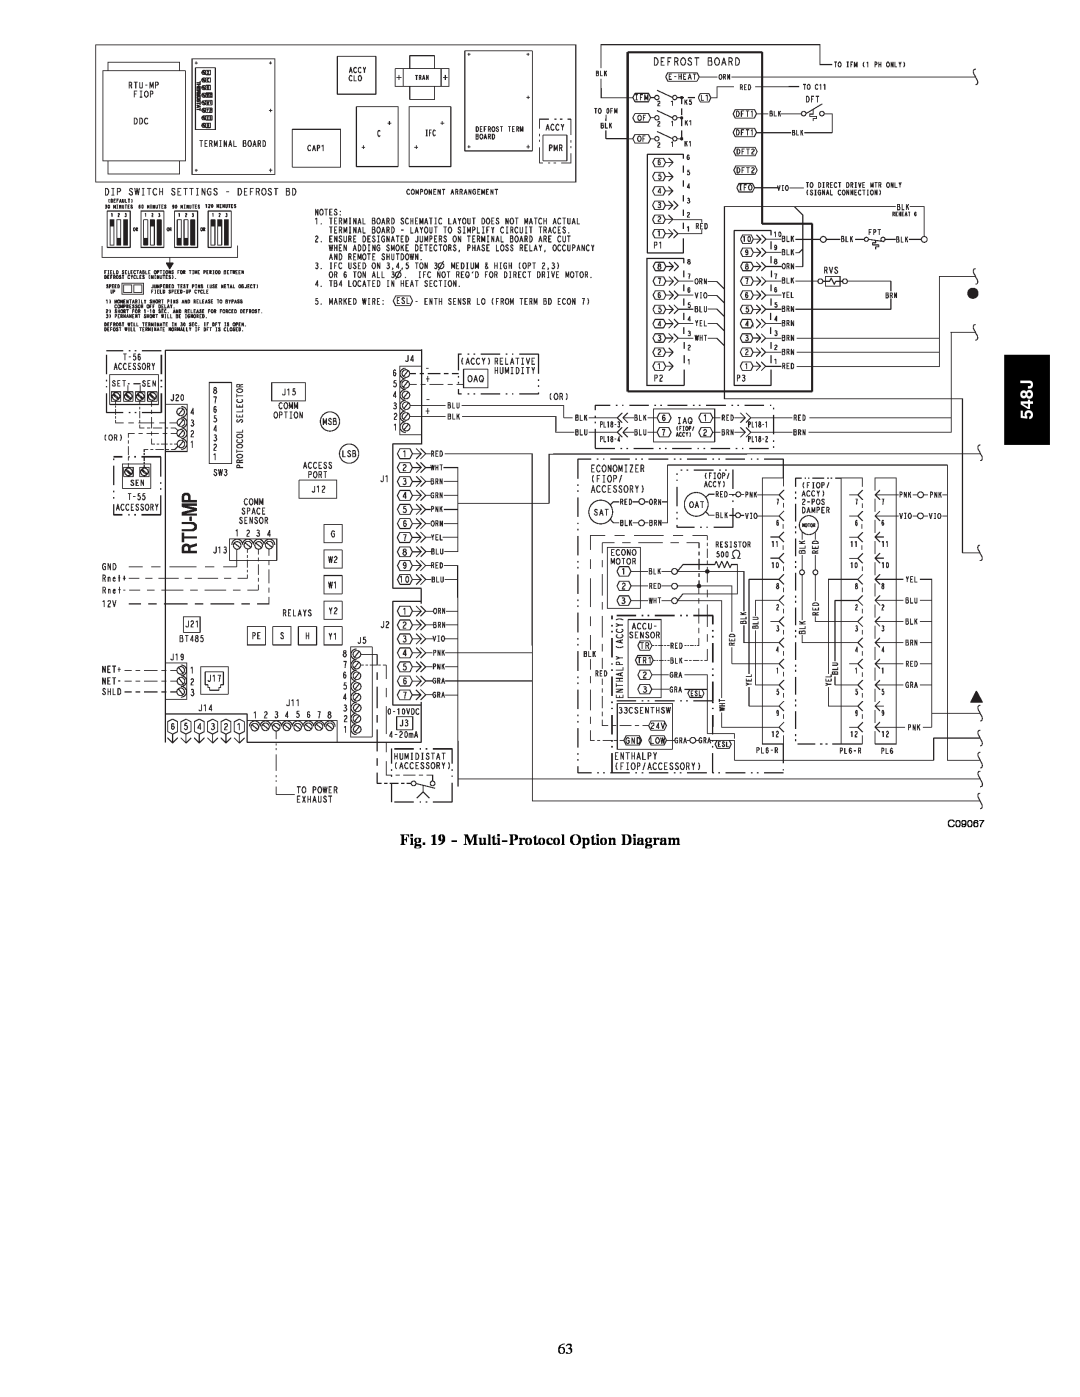 Bryant 548J manual Multi-ProtocolOption Diagram, C09067 